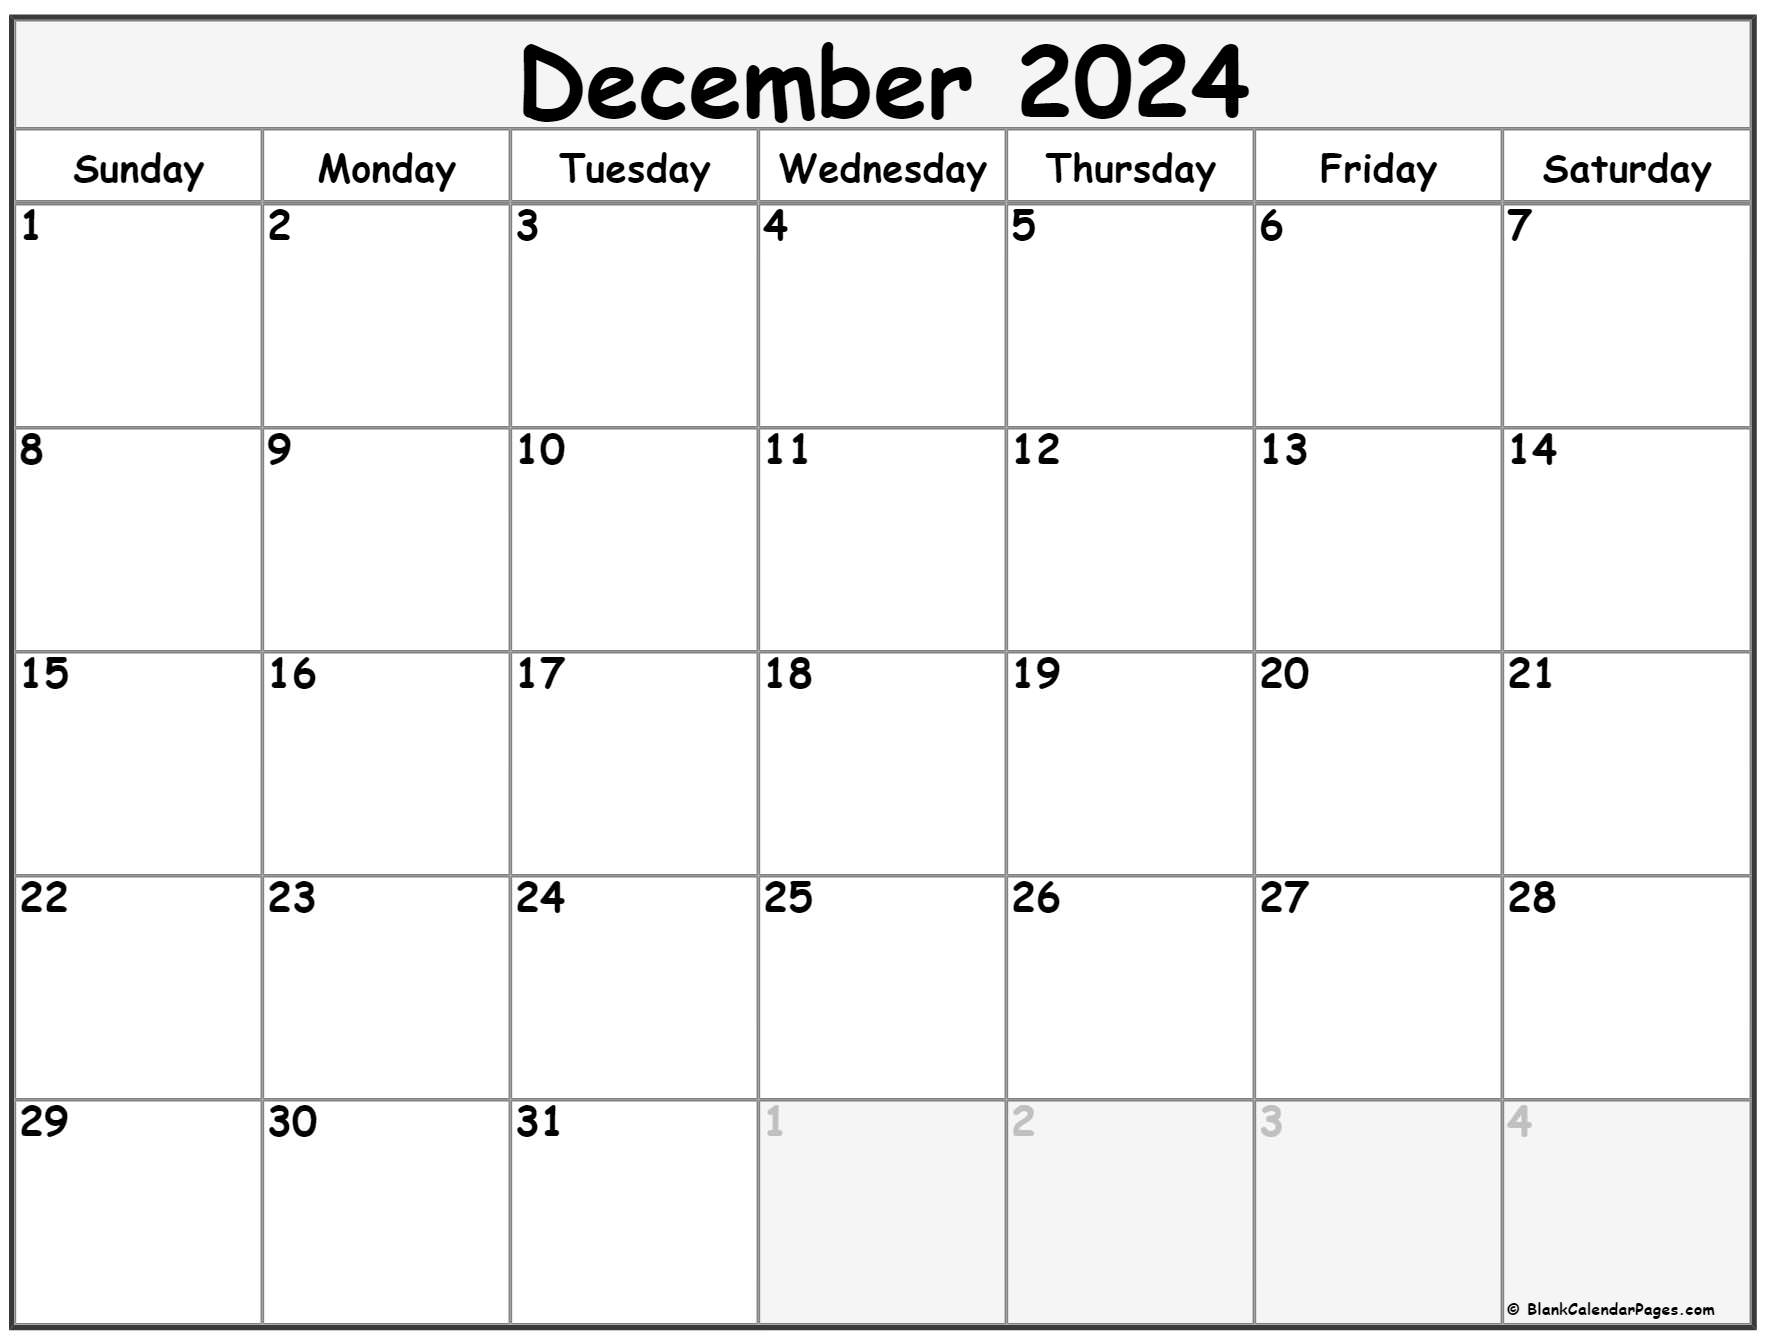 December 2024 Calendar | Free Printable Calendar for Free Printable Blank December Calendar 2024